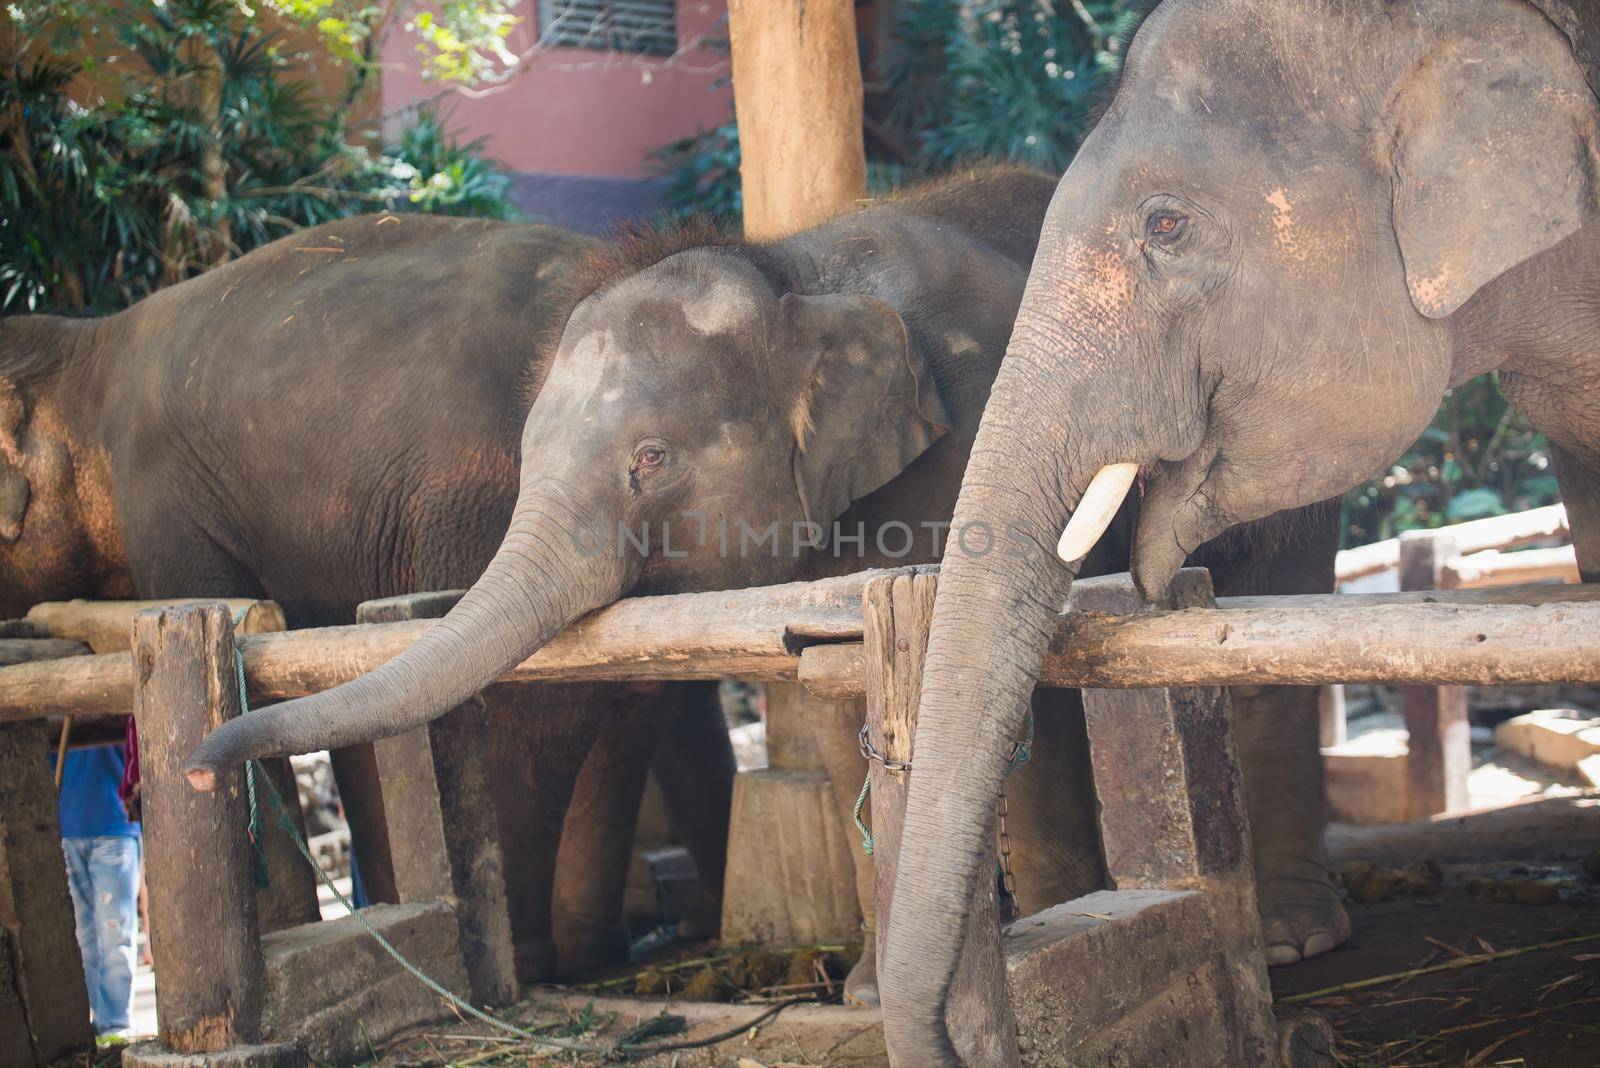 elephant at the zoo by Wmpix